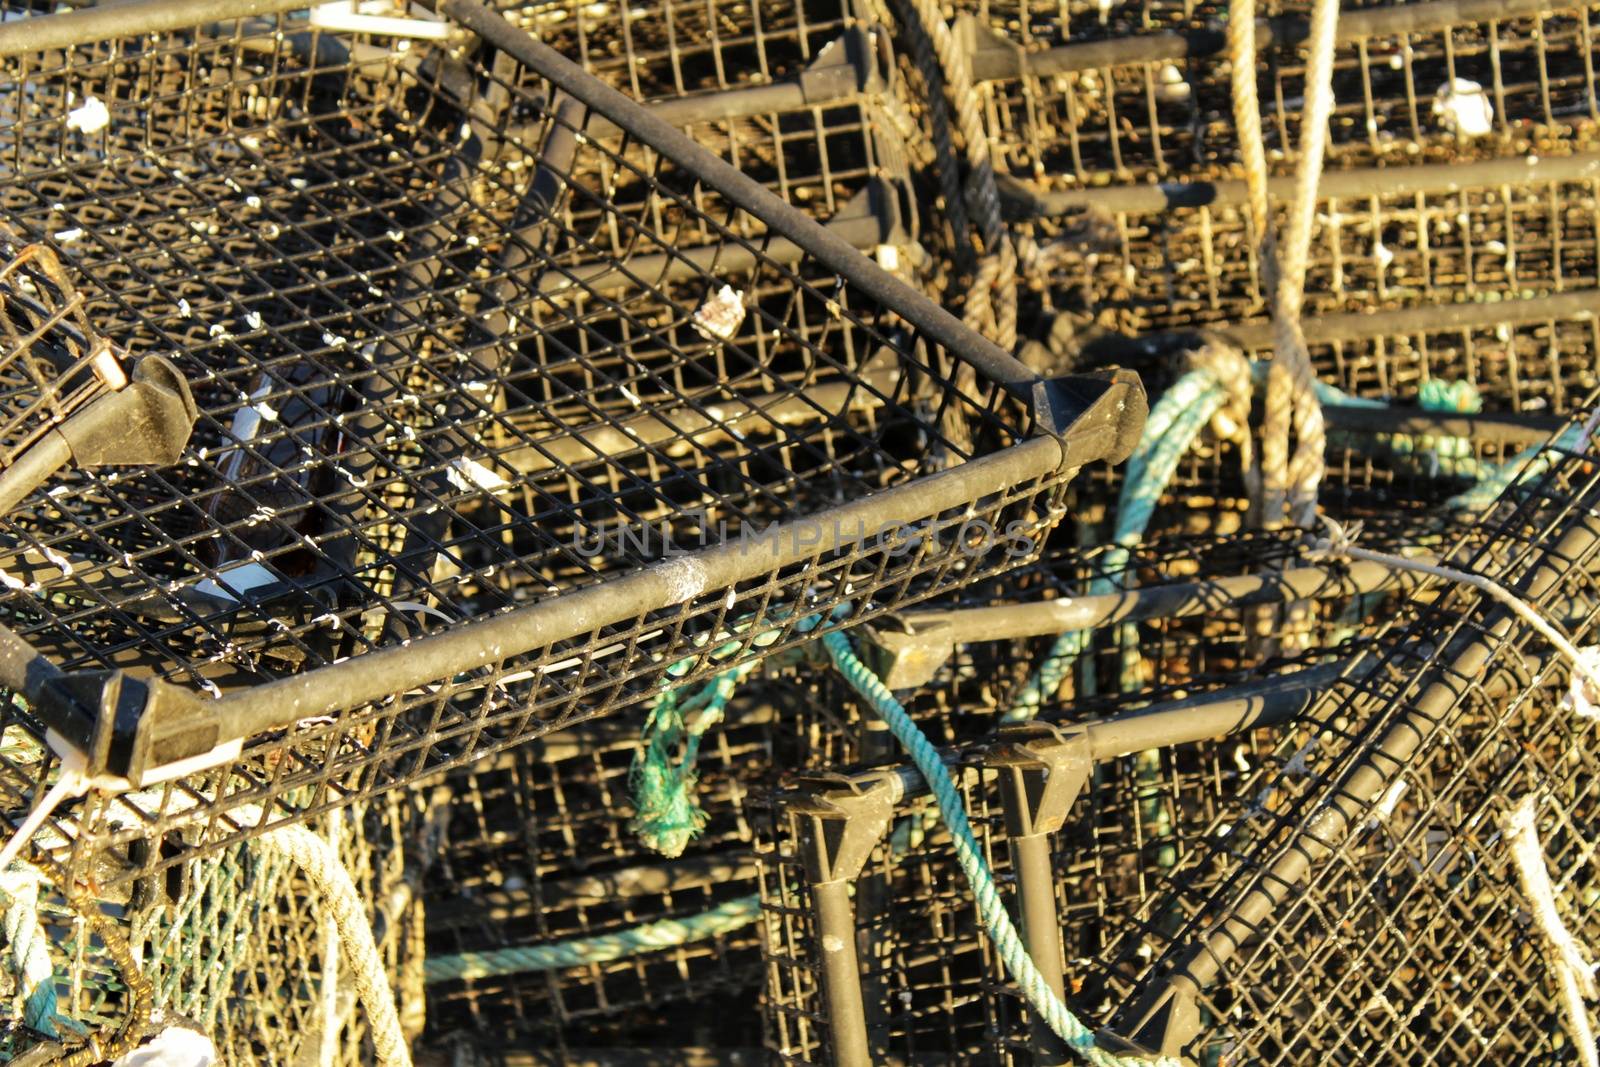 Fishing baskets in the port of Santa Pola, Alicante by soniabonet